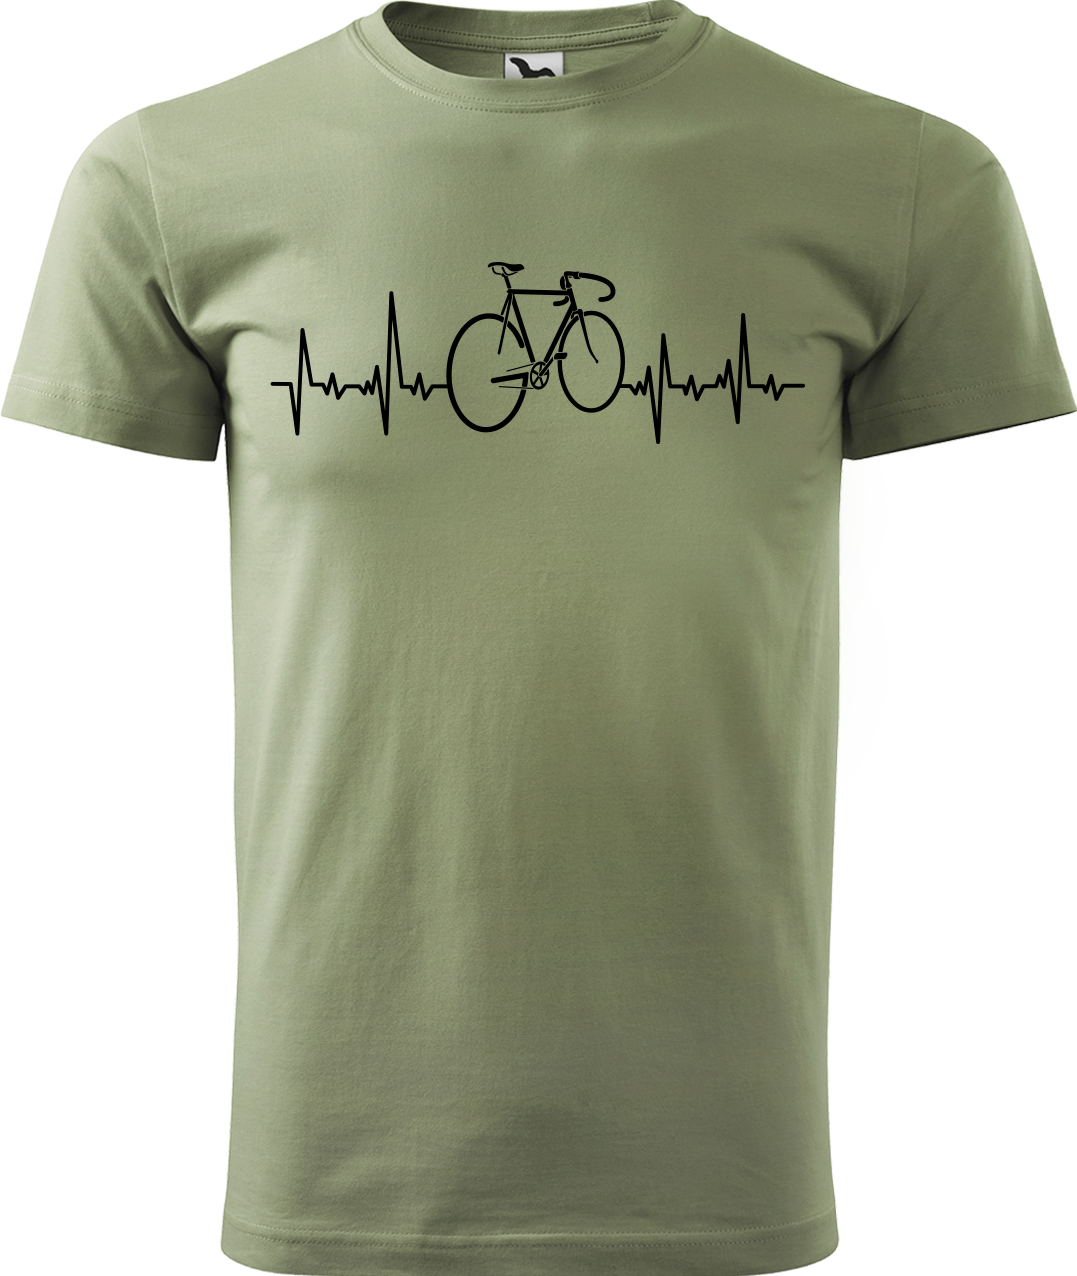 Pánské tričko s kolem - Cyklistův kardiogram Velikost: L, Barva: Světlá khaki (28)